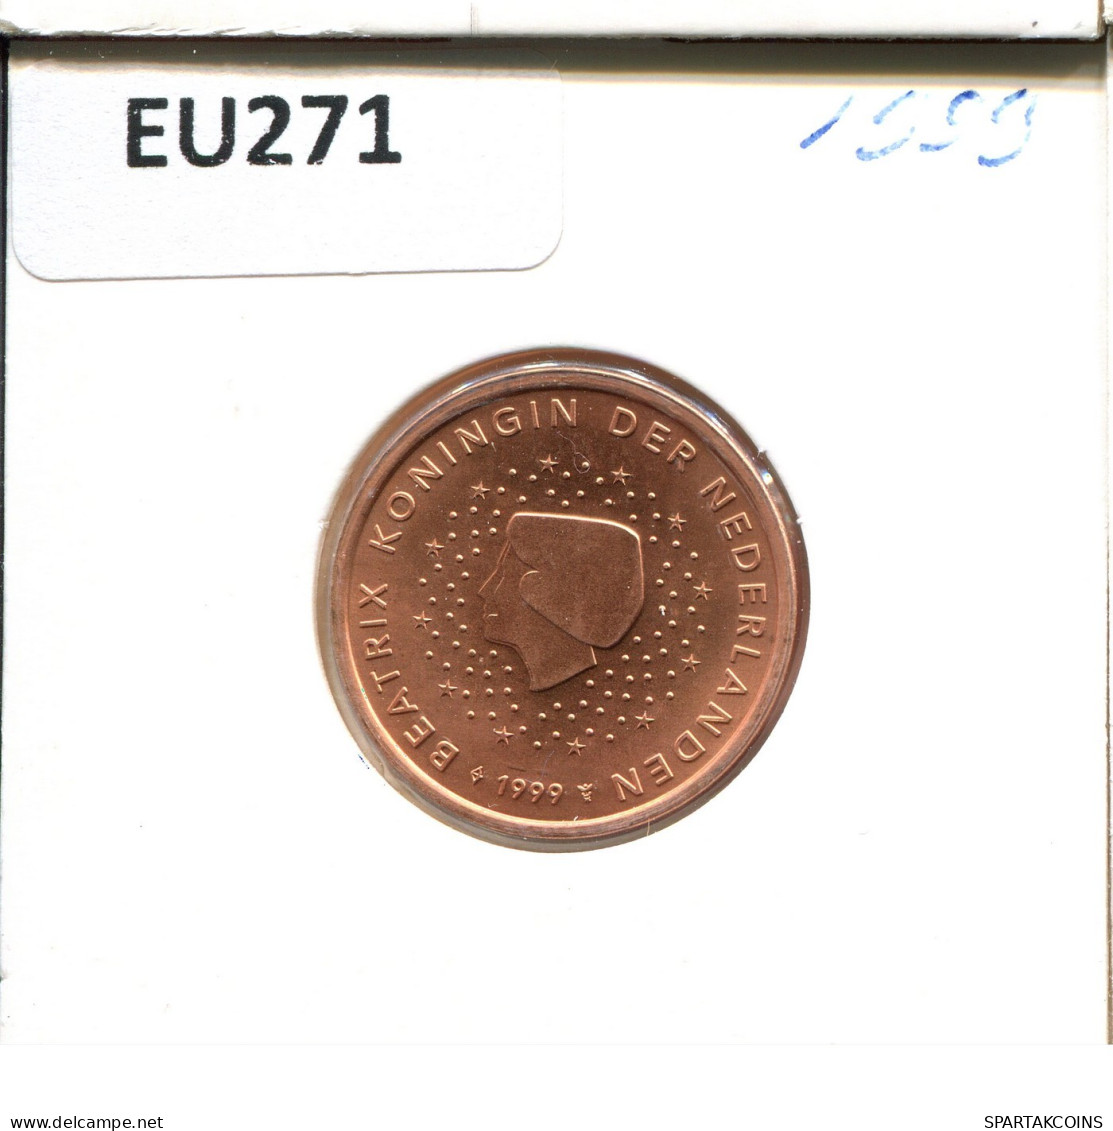 5 EURO CENTS 1999 NIEDERLANDE NETHERLANDS Münze #EU271.D.A - Netherlands